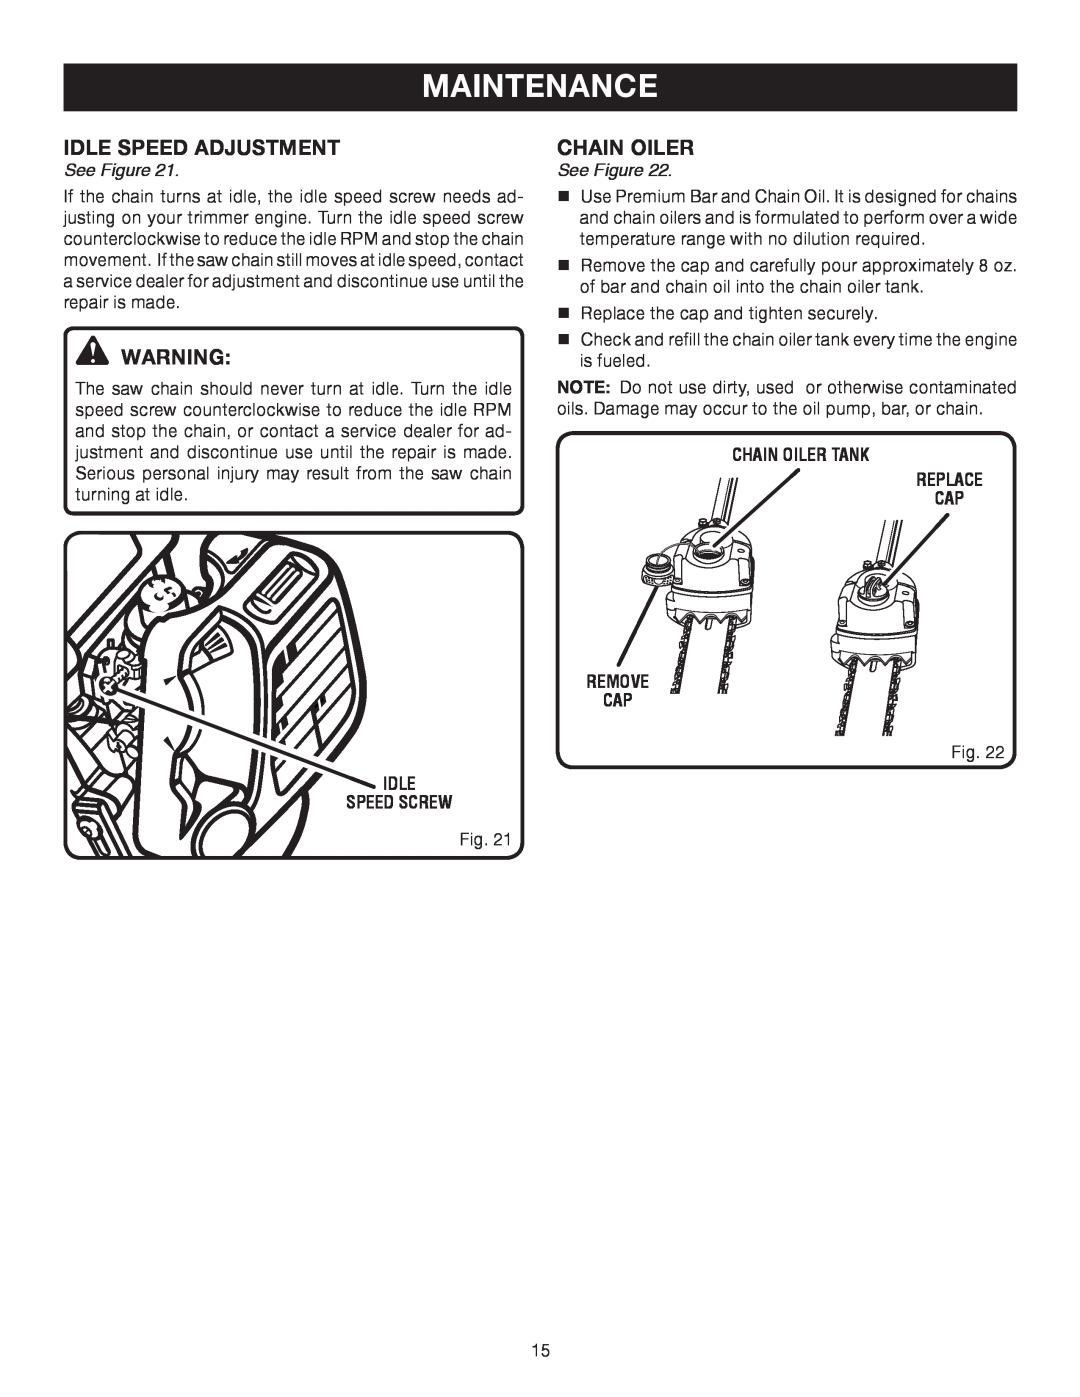 Ryobi RY52003 manual Idle Speed Adjustment, Maintenance, Chain Oiler, See Figure, Idle Speed Screw 